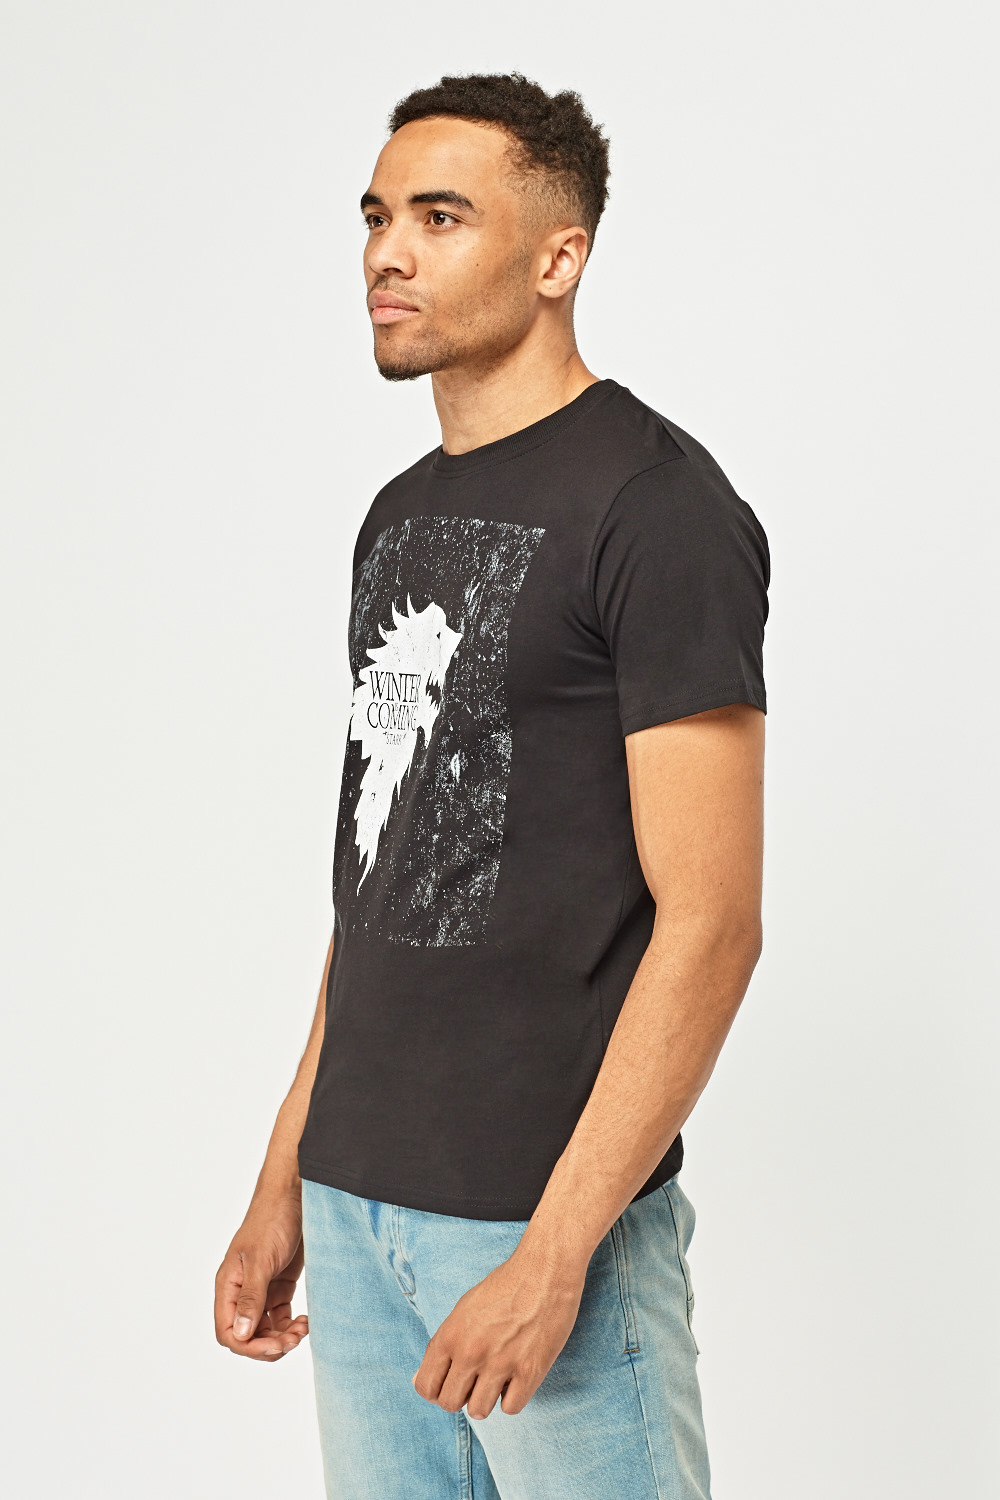 Crew Neck Mens Graphic T-Shirt - Just $7